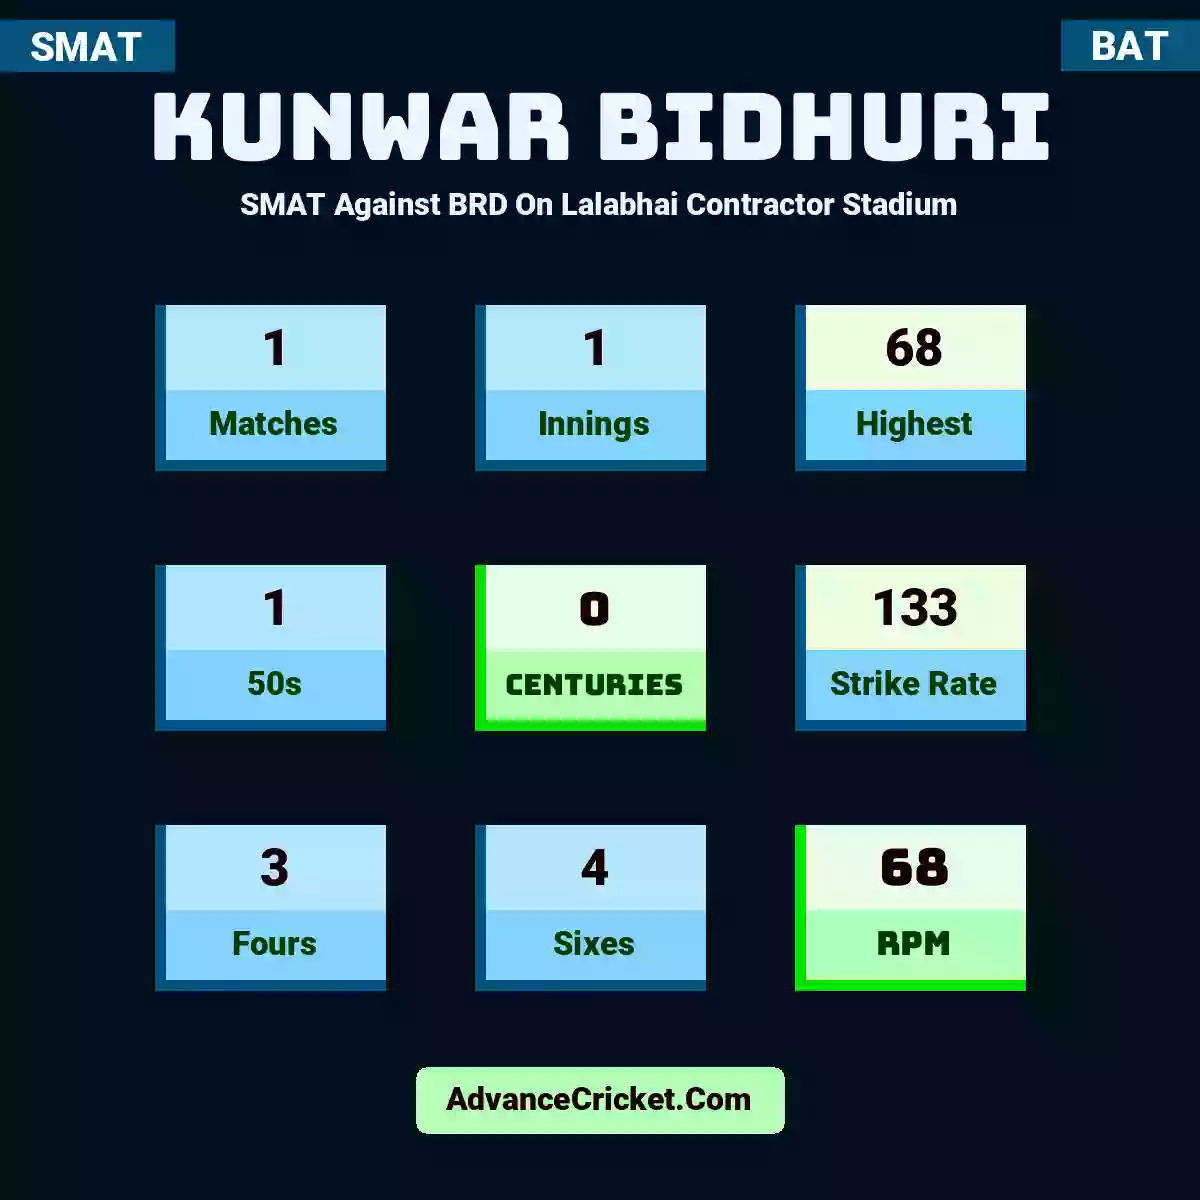 Kunwar Bidhuri SMAT  Against BRD On Lalabhai Contractor Stadium, Kunwar Bidhuri played 1 matches, scored 68 runs as highest, 1 half-centuries, and 0 centuries, with a strike rate of 133. K.Bidhuri hit 3 fours and 4 sixes, with an RPM of 68.